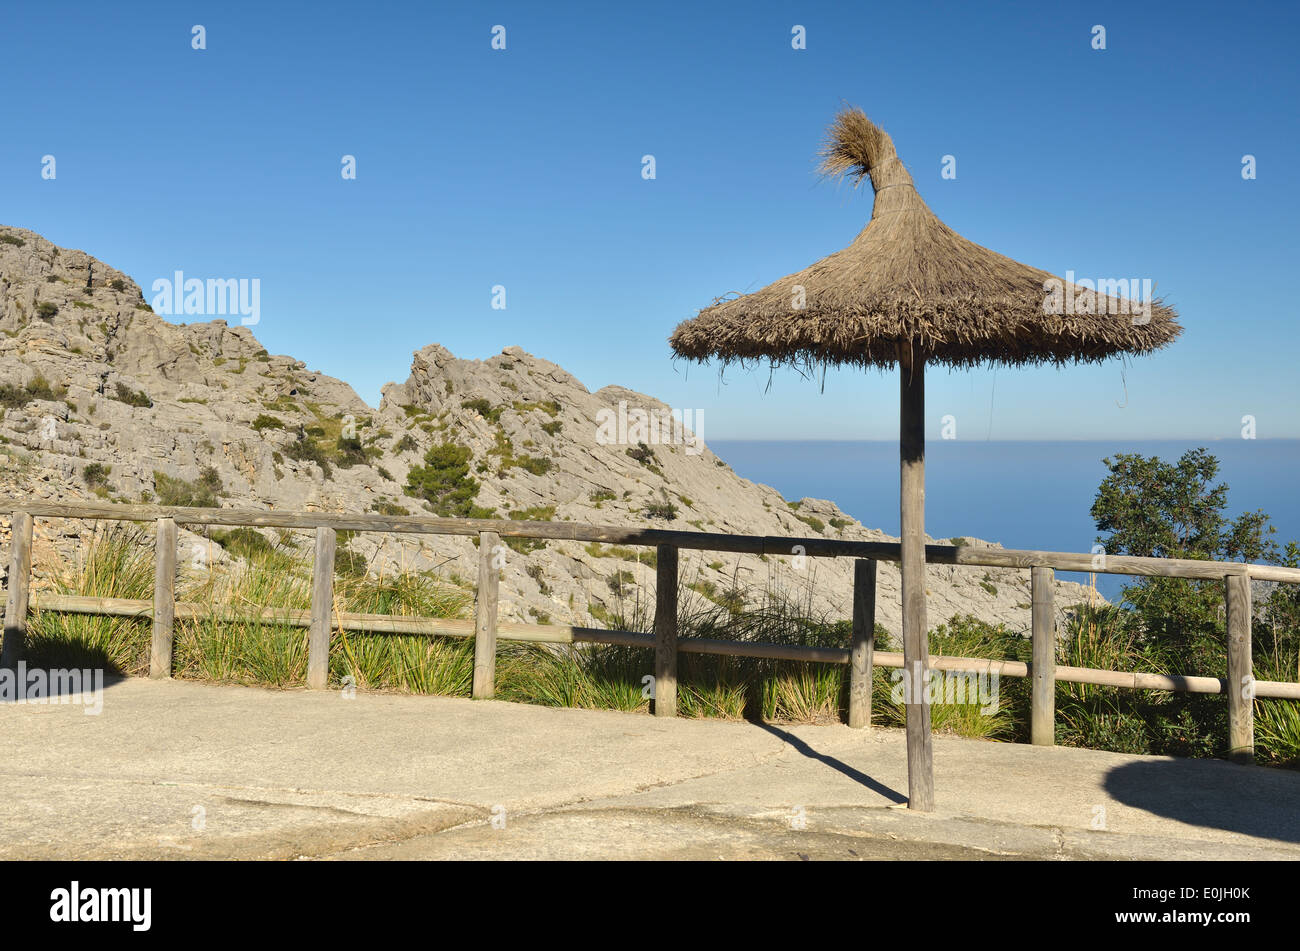 Cafe mit Stroh Sonnenschirme, Serra de Tramuntana-Gebirge, Mallorca, Spanien Stockfoto